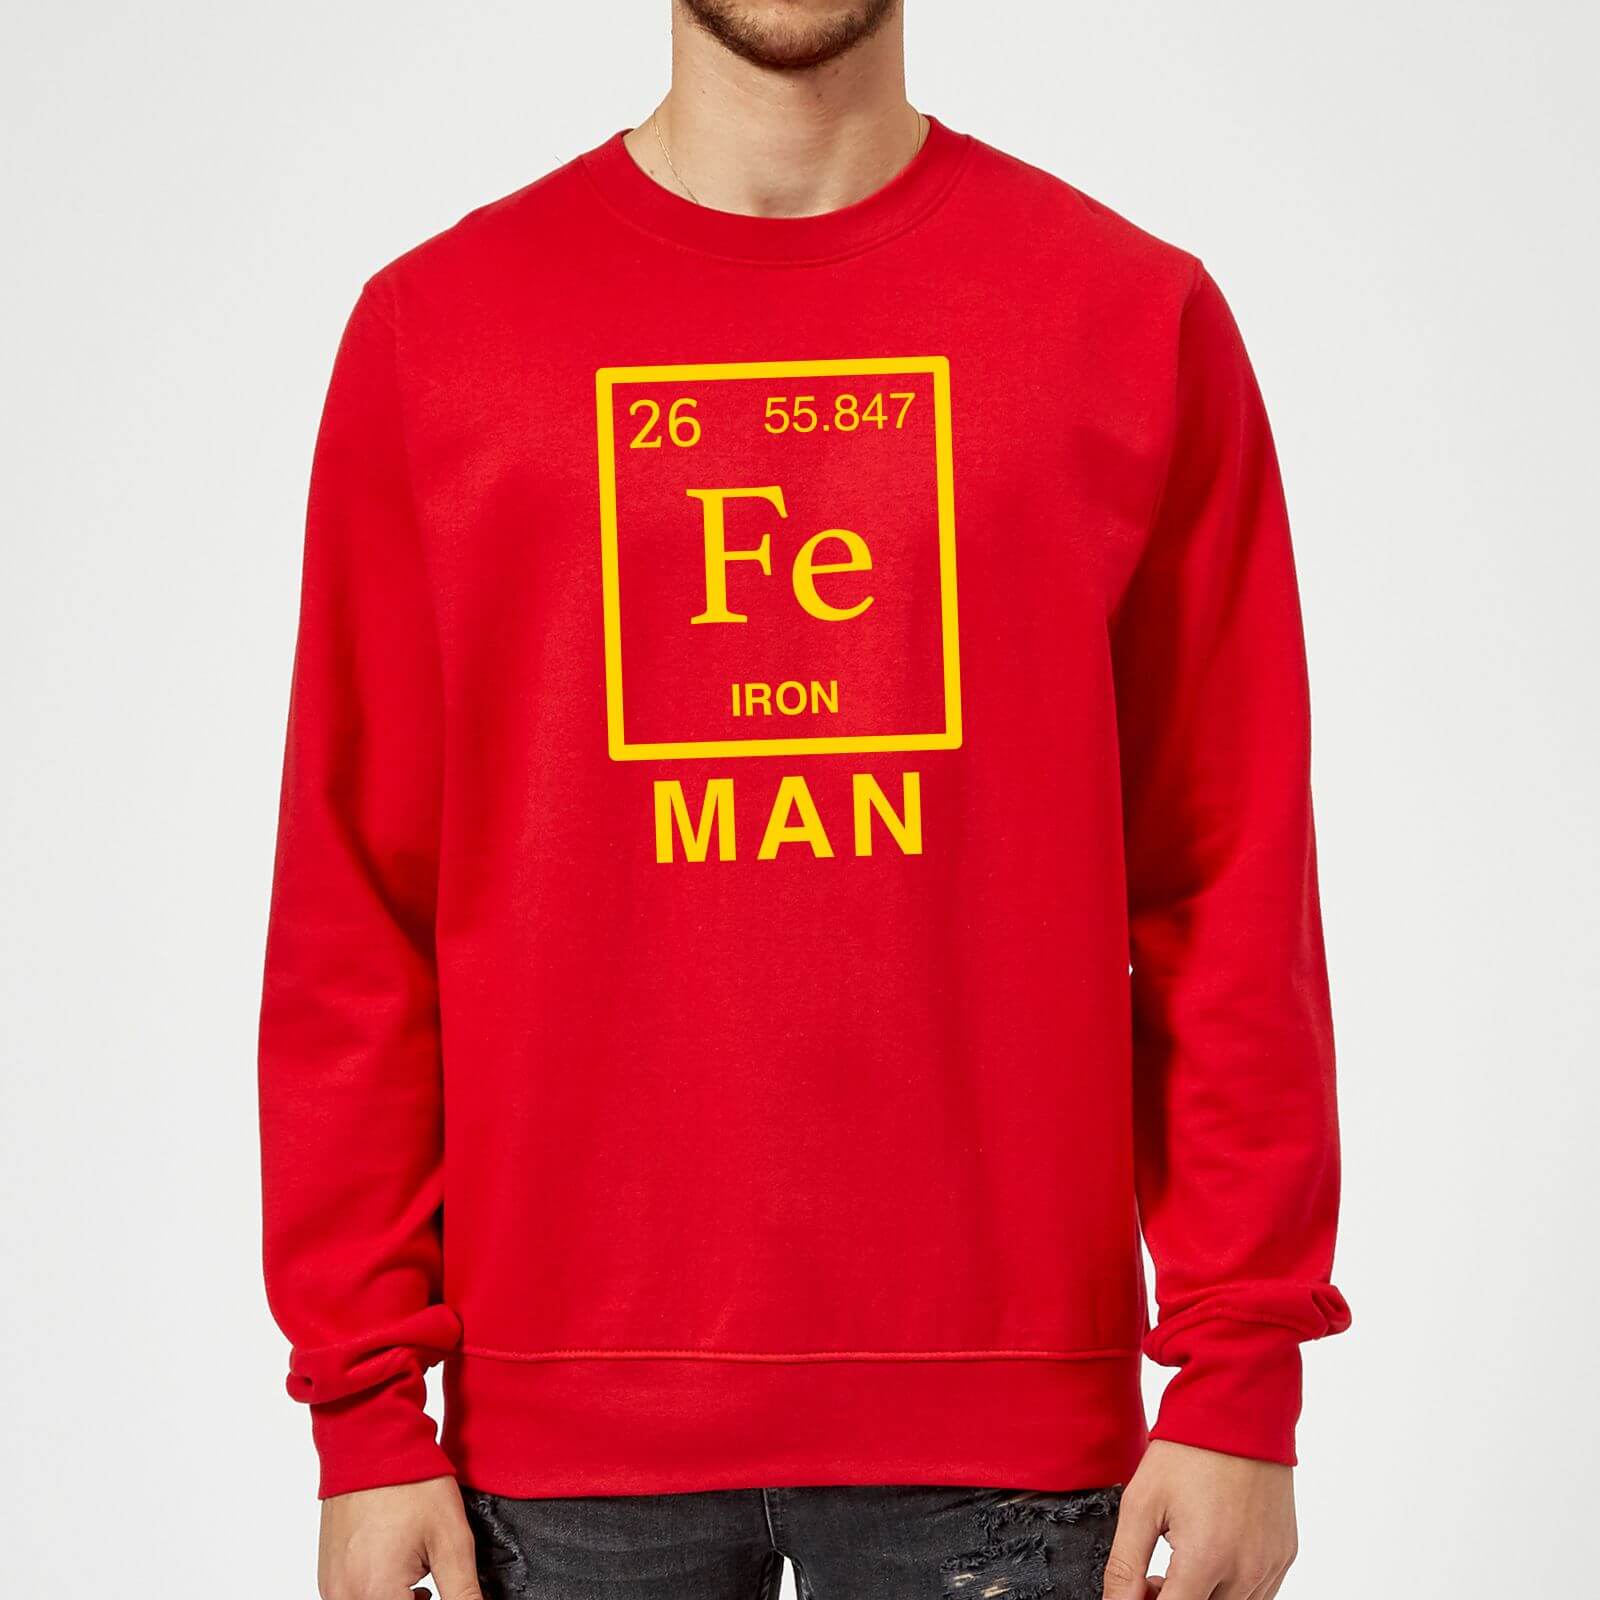 Fe Man Sweatshirt - Red - M - Red